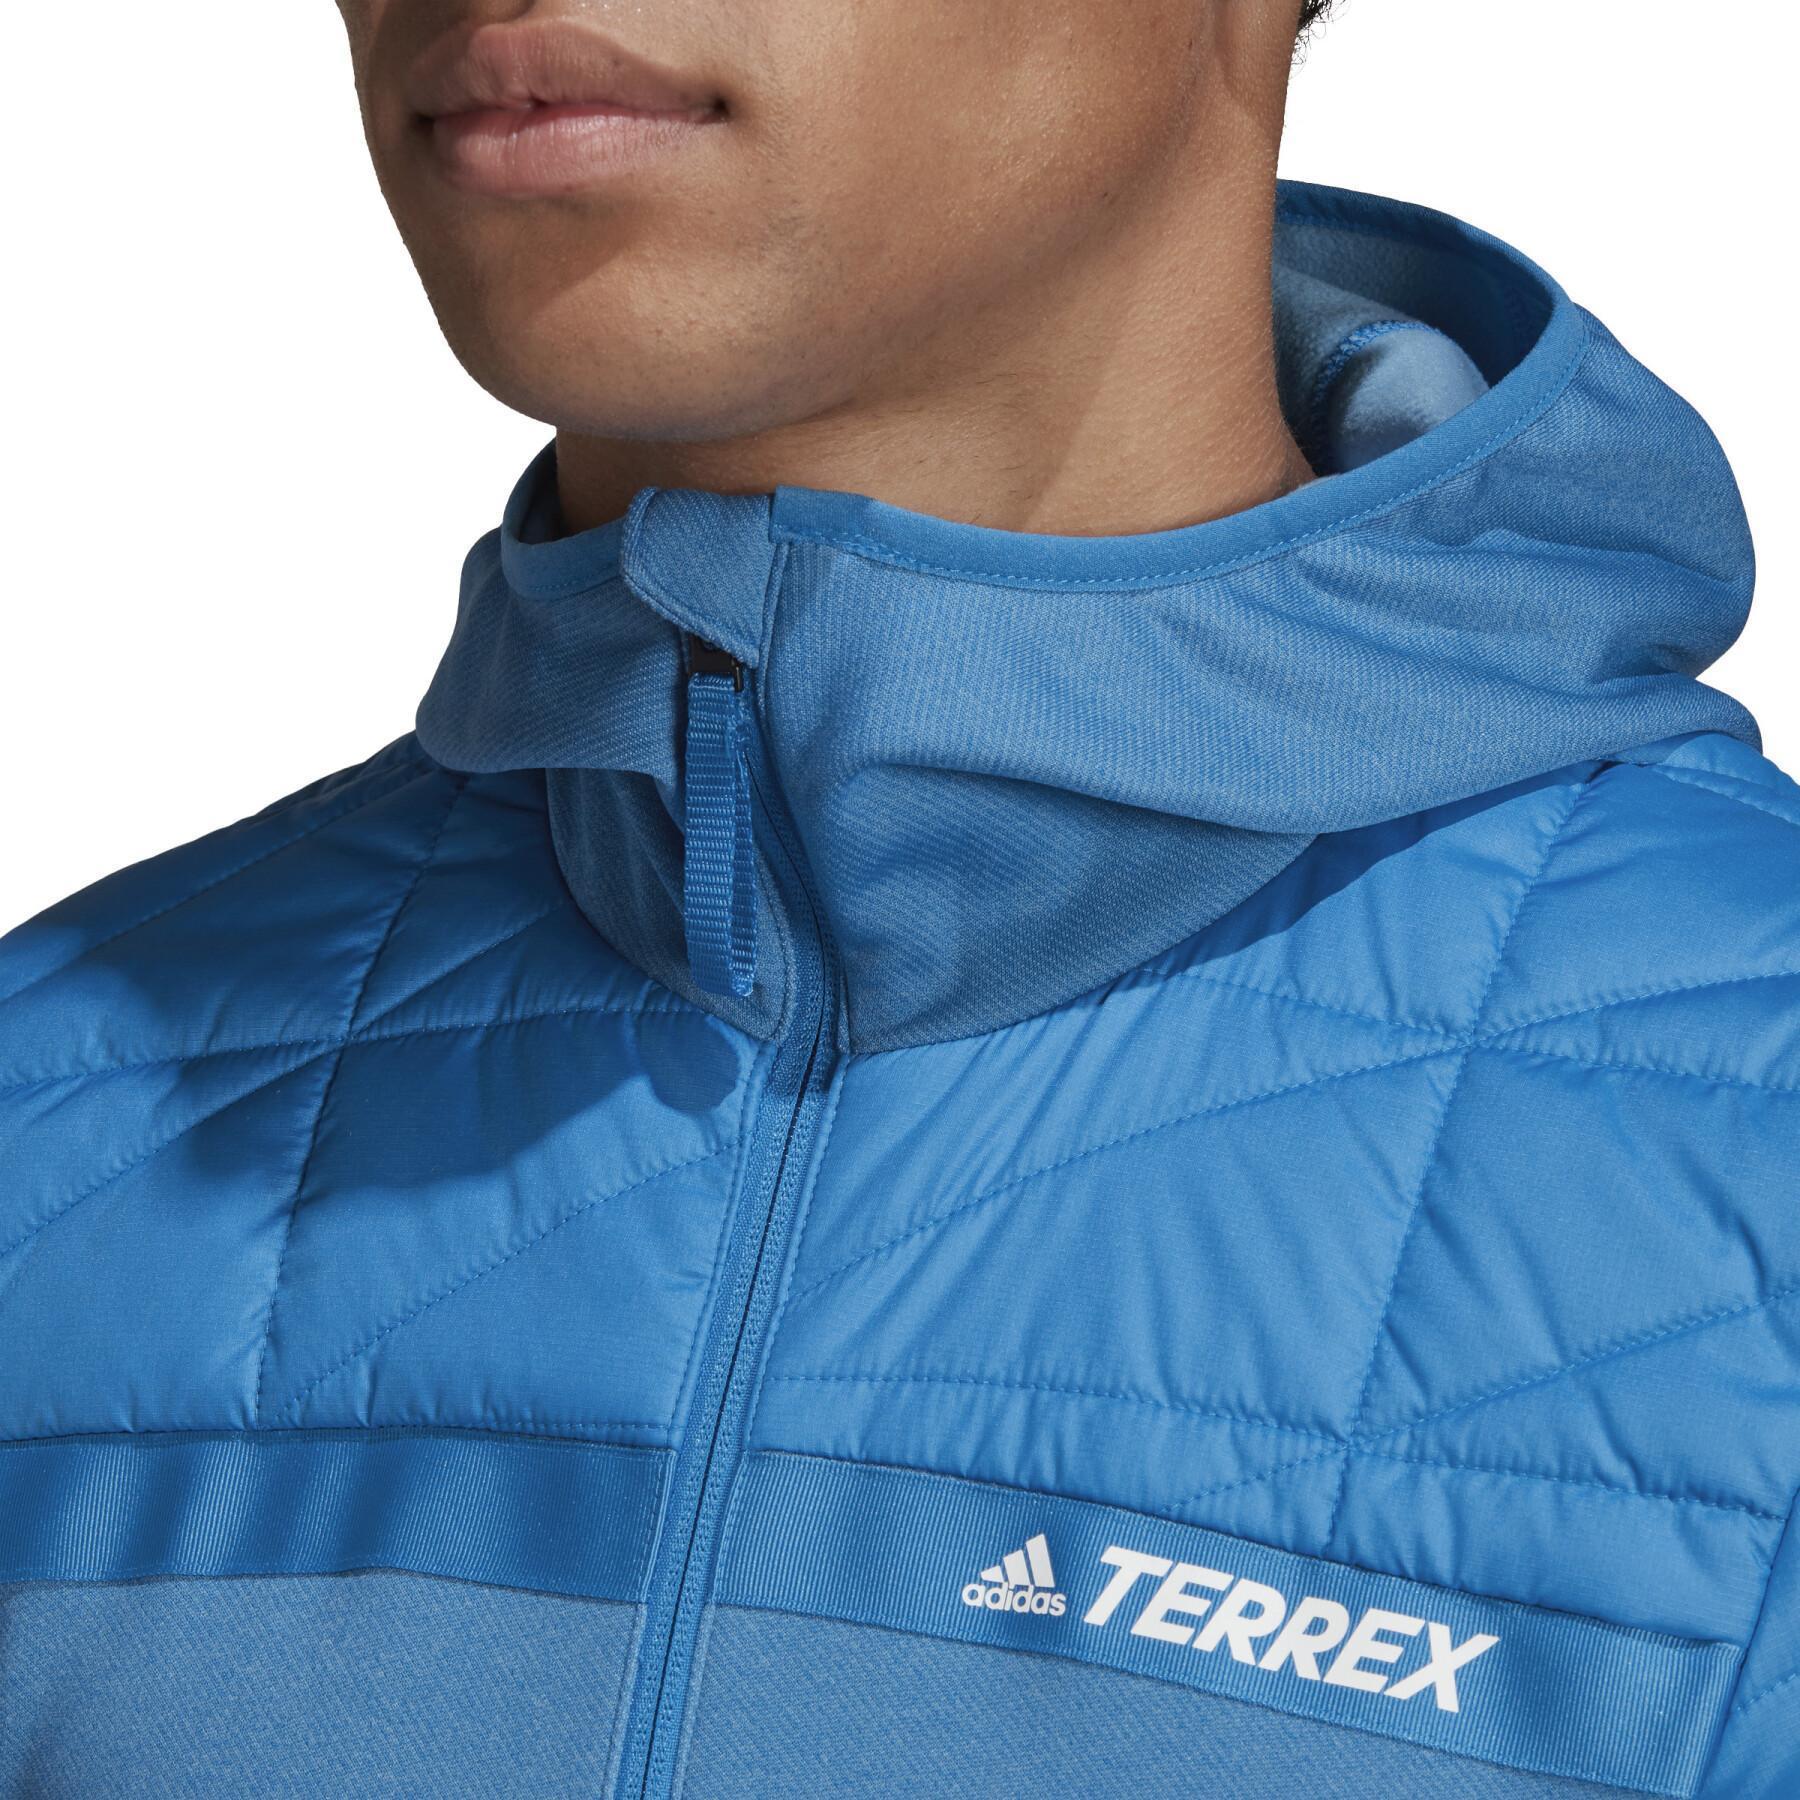 Waterproof jacket adidas Terrex